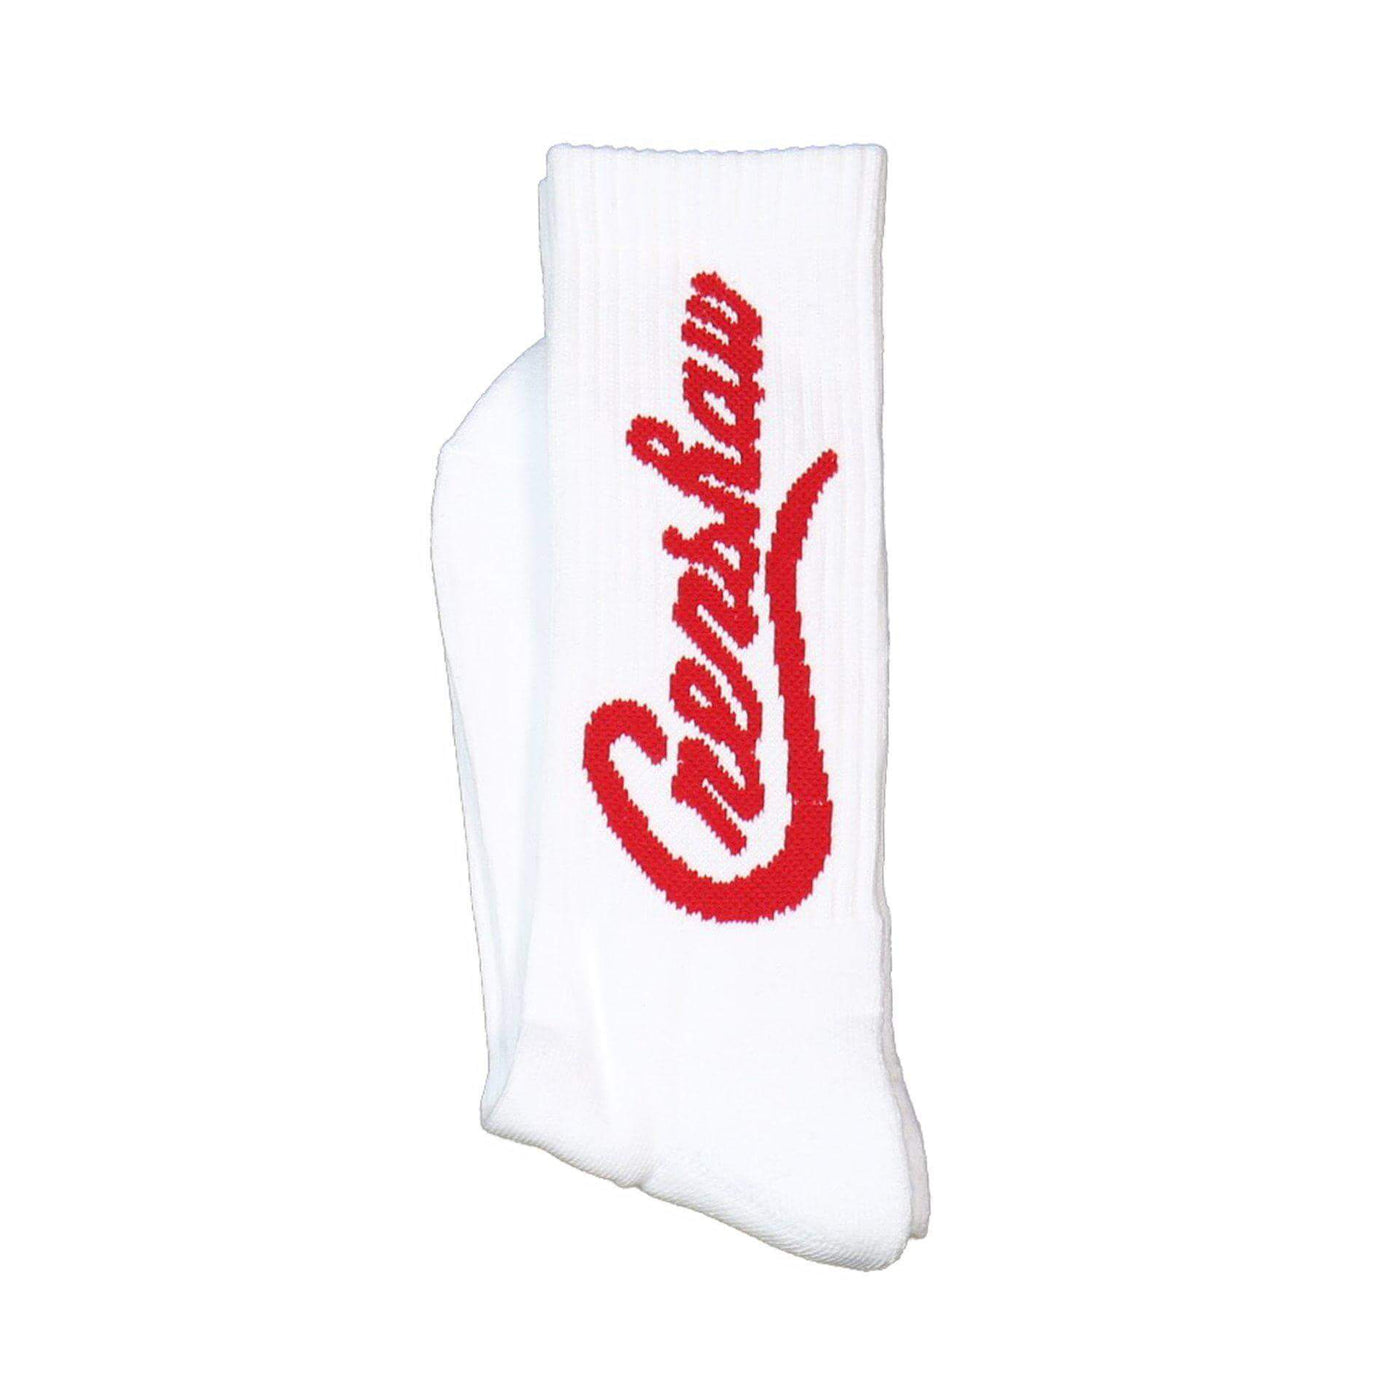 Crenshaw Socks - White/Red-The Marathon Clothing